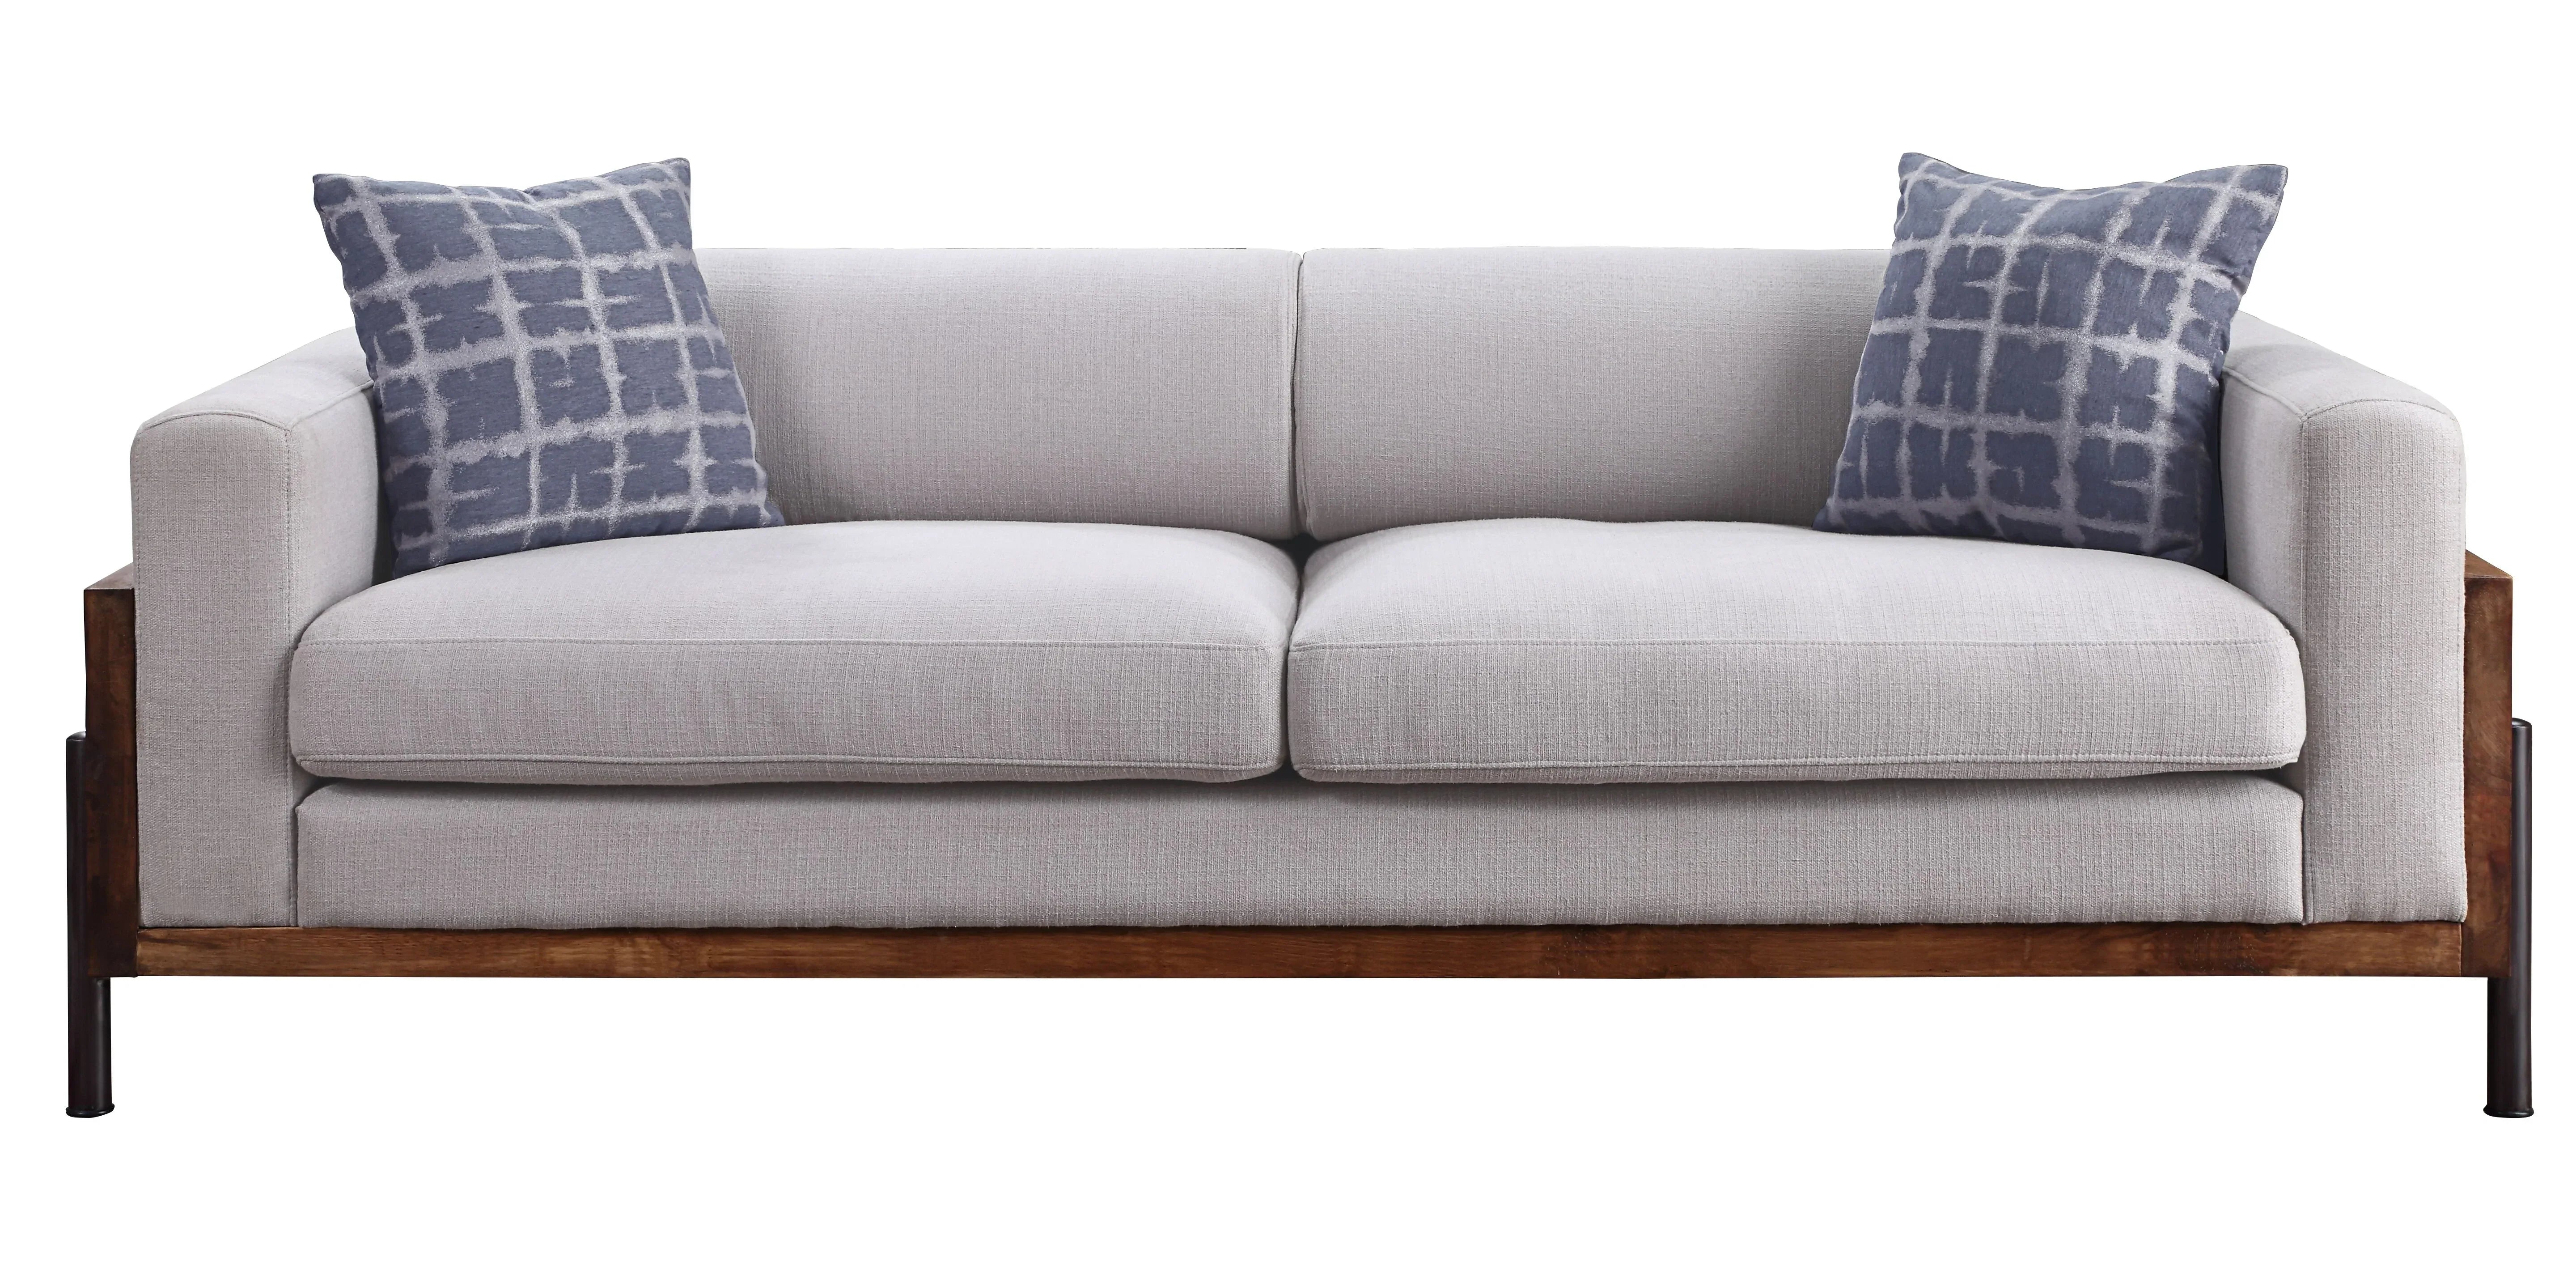 Pelton Fabric & Walnut Sofa Model 54890 By ACME Furniture